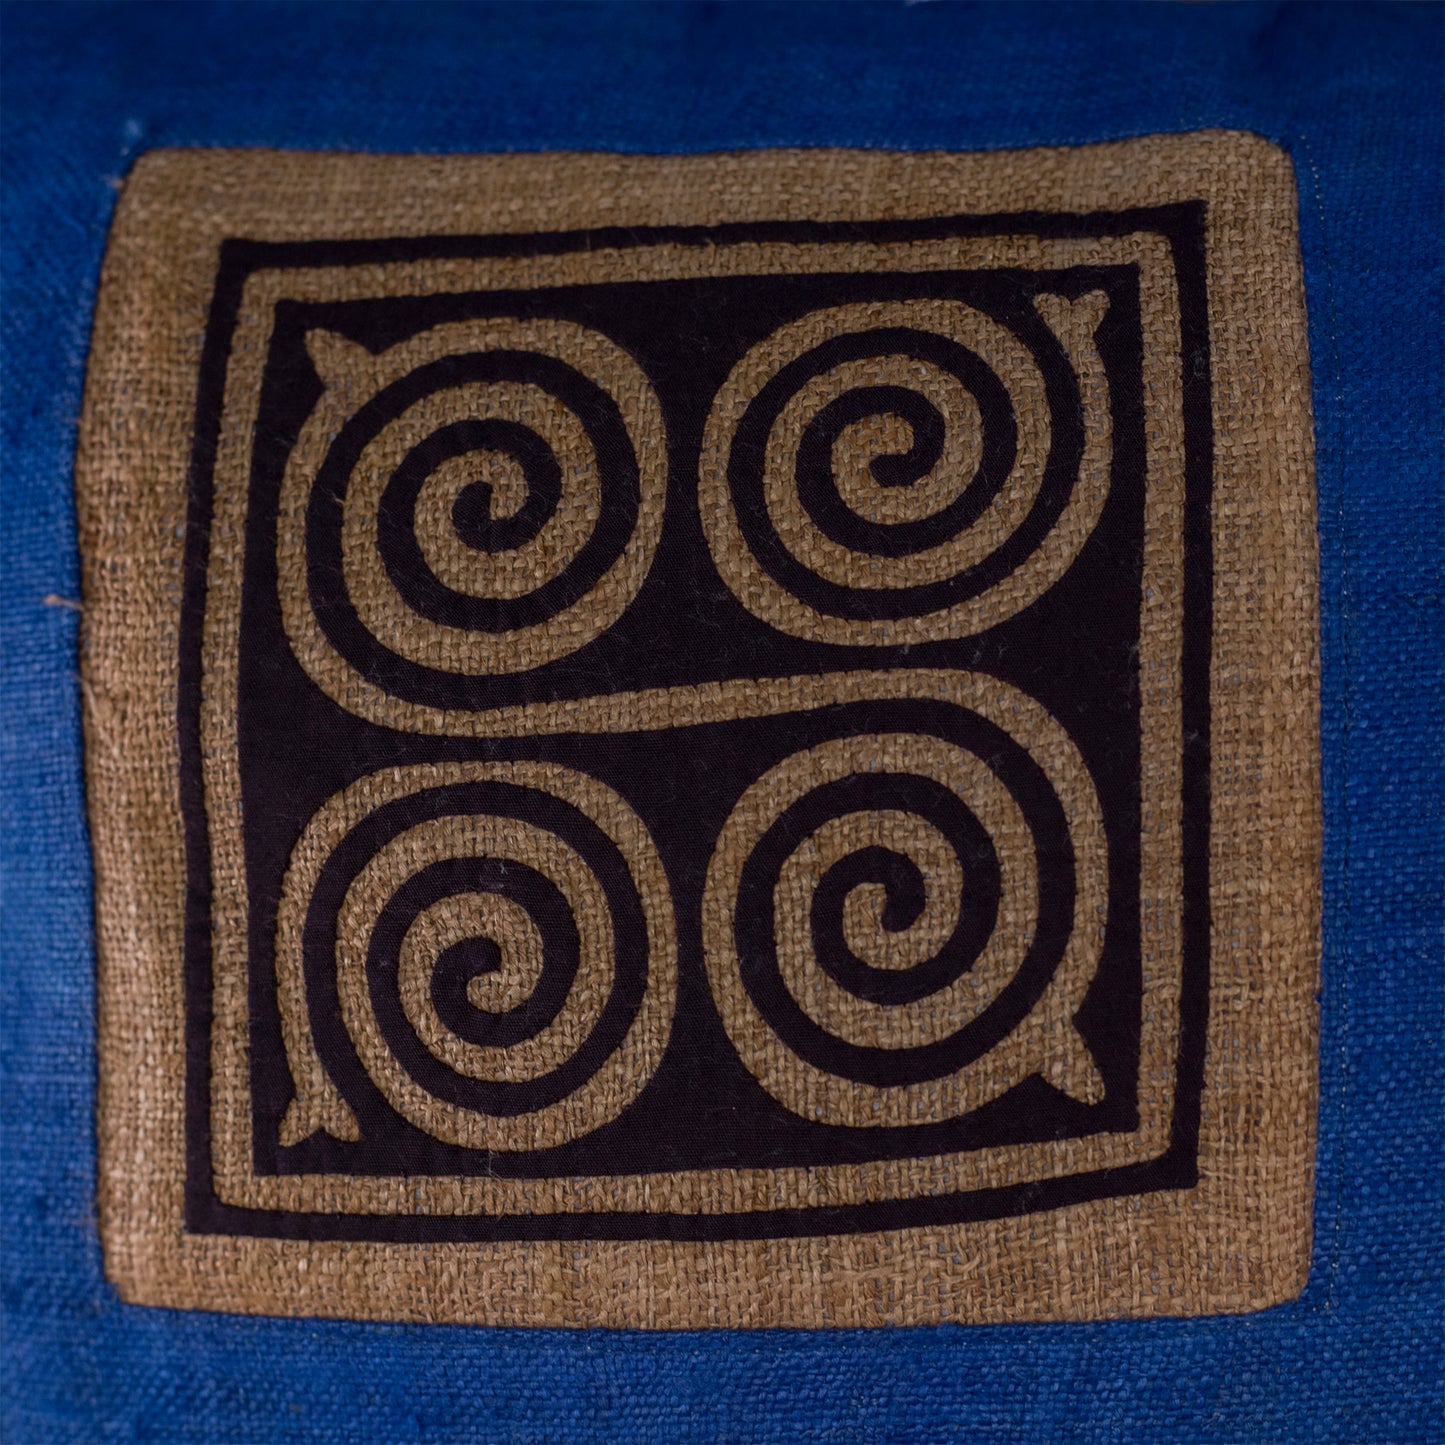 Hemp Cushion Cover in Catalina Blue - H'mong pattern, handwoven fabric stripes, handmade 100%